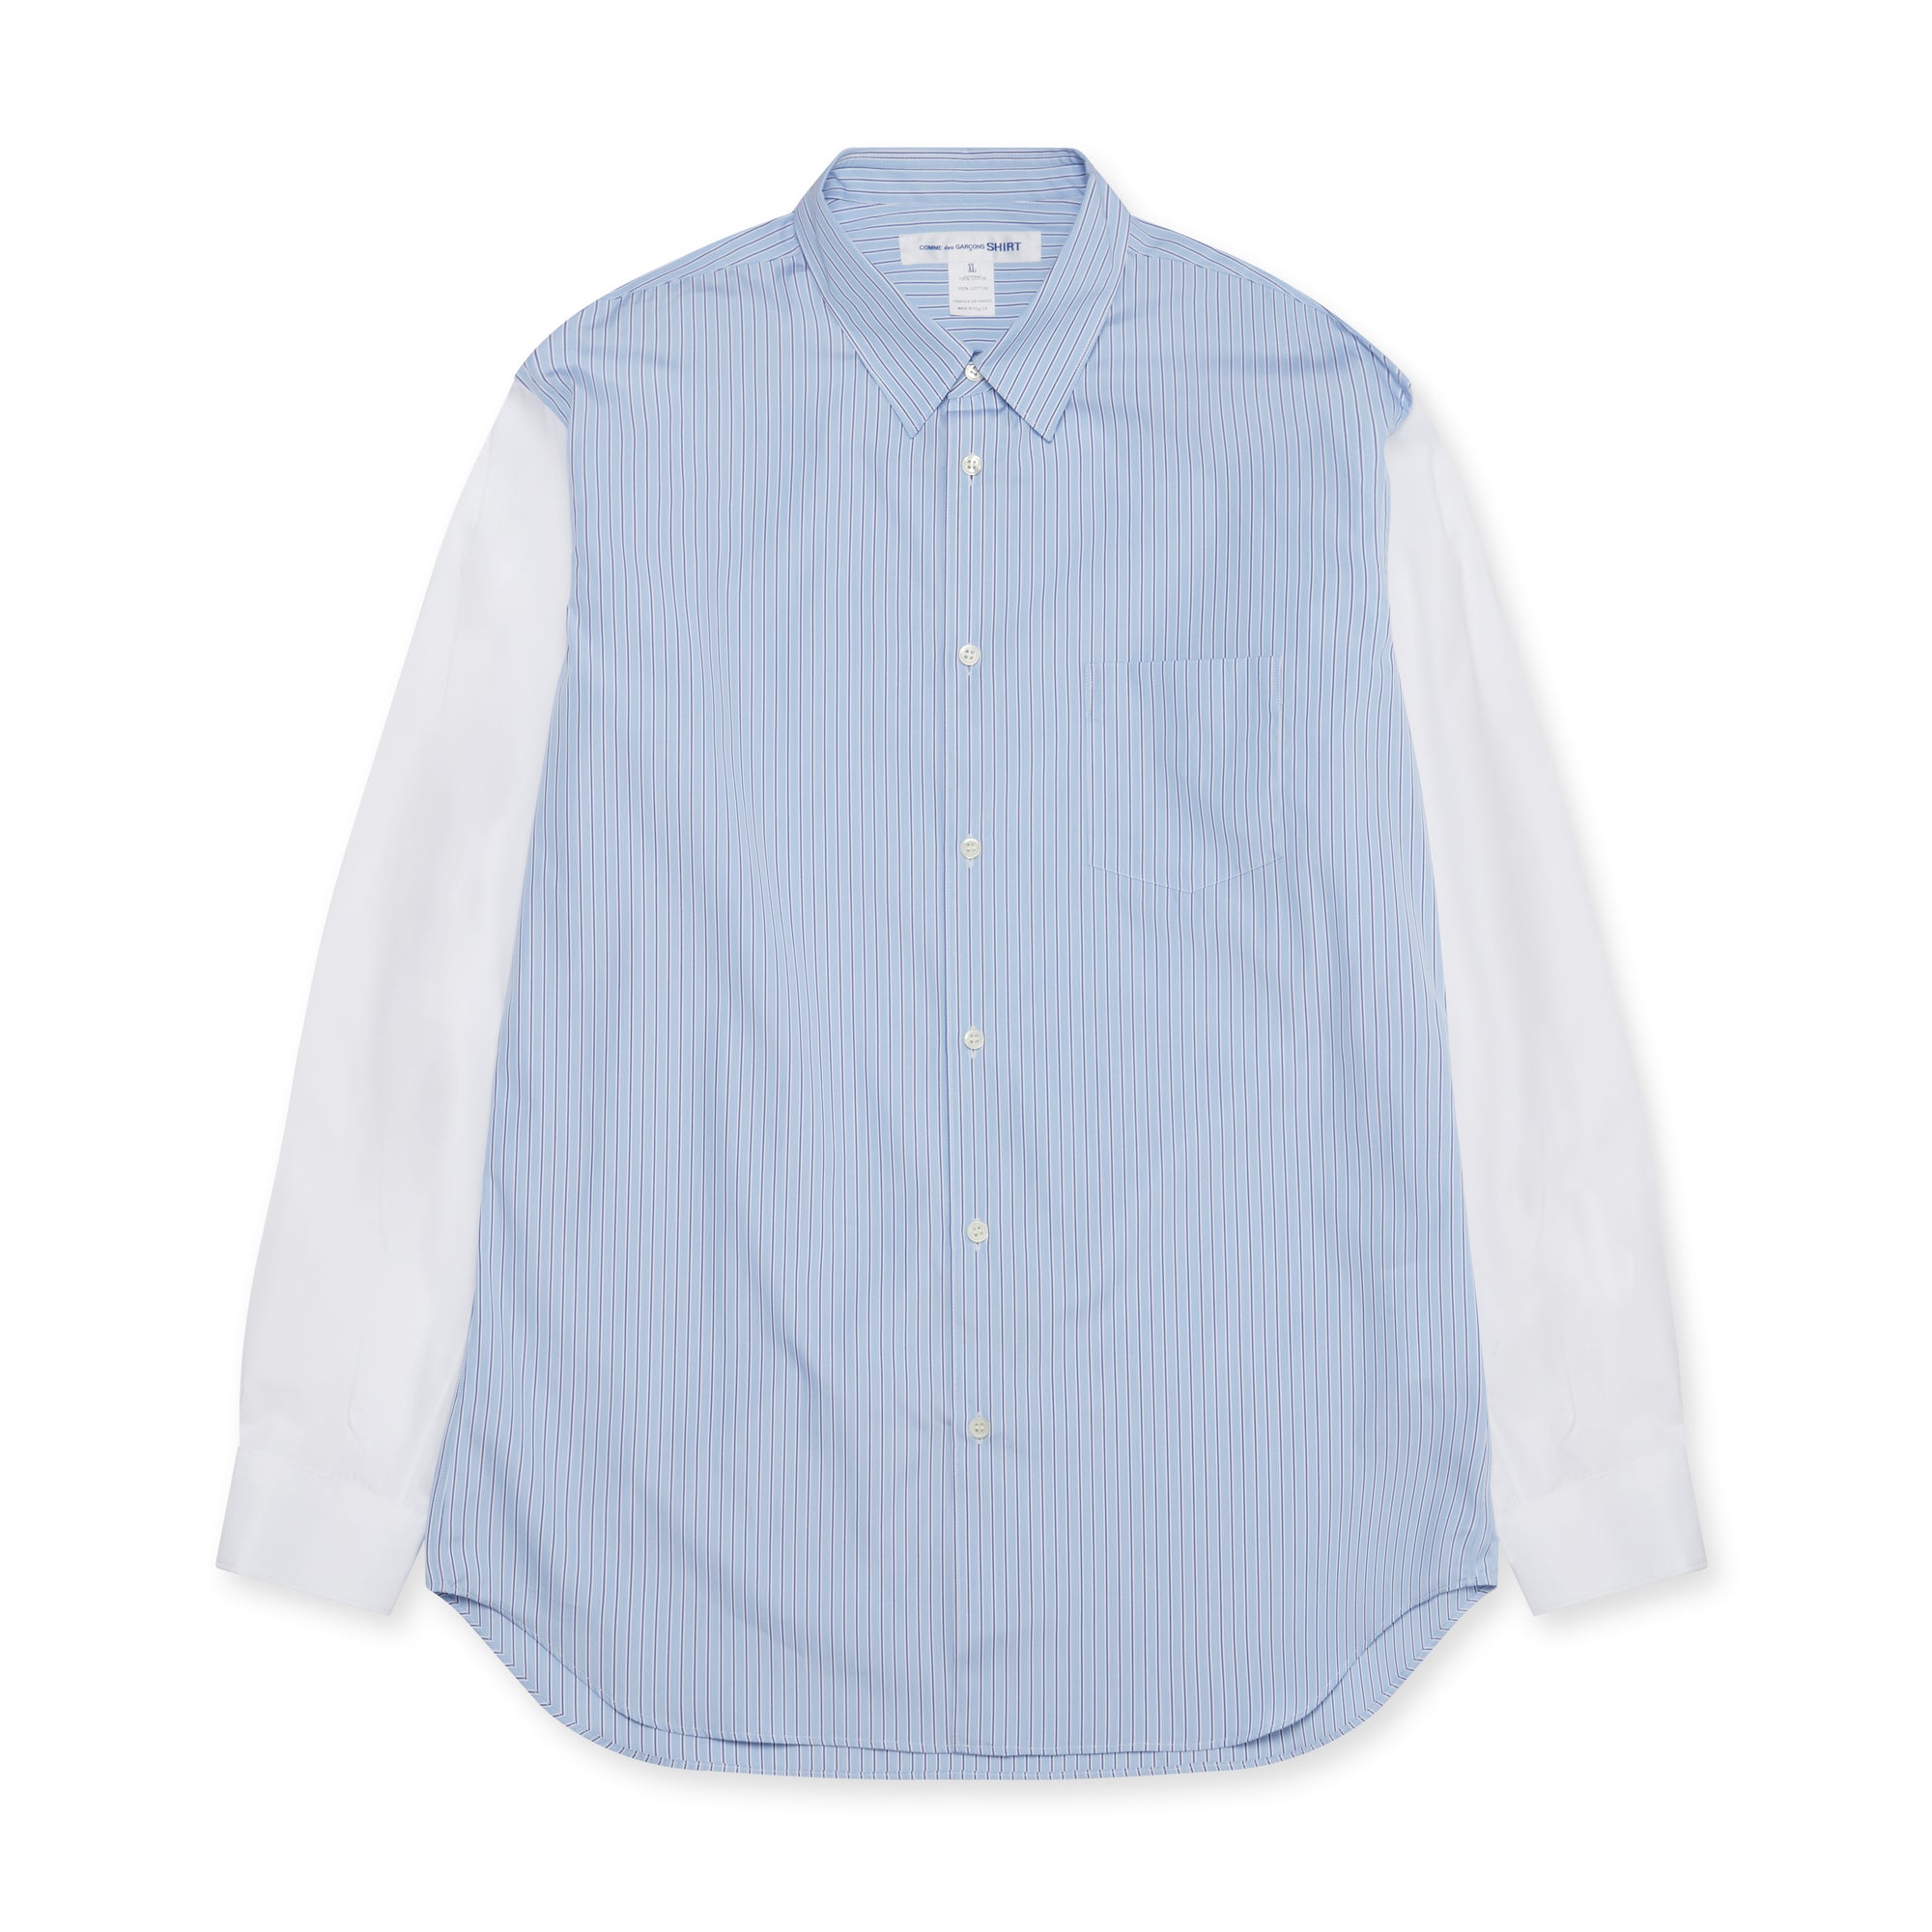 CDG Shirt Forever - Plain And Stripe Poplin Shirt - (Stripe/Mix) view 1